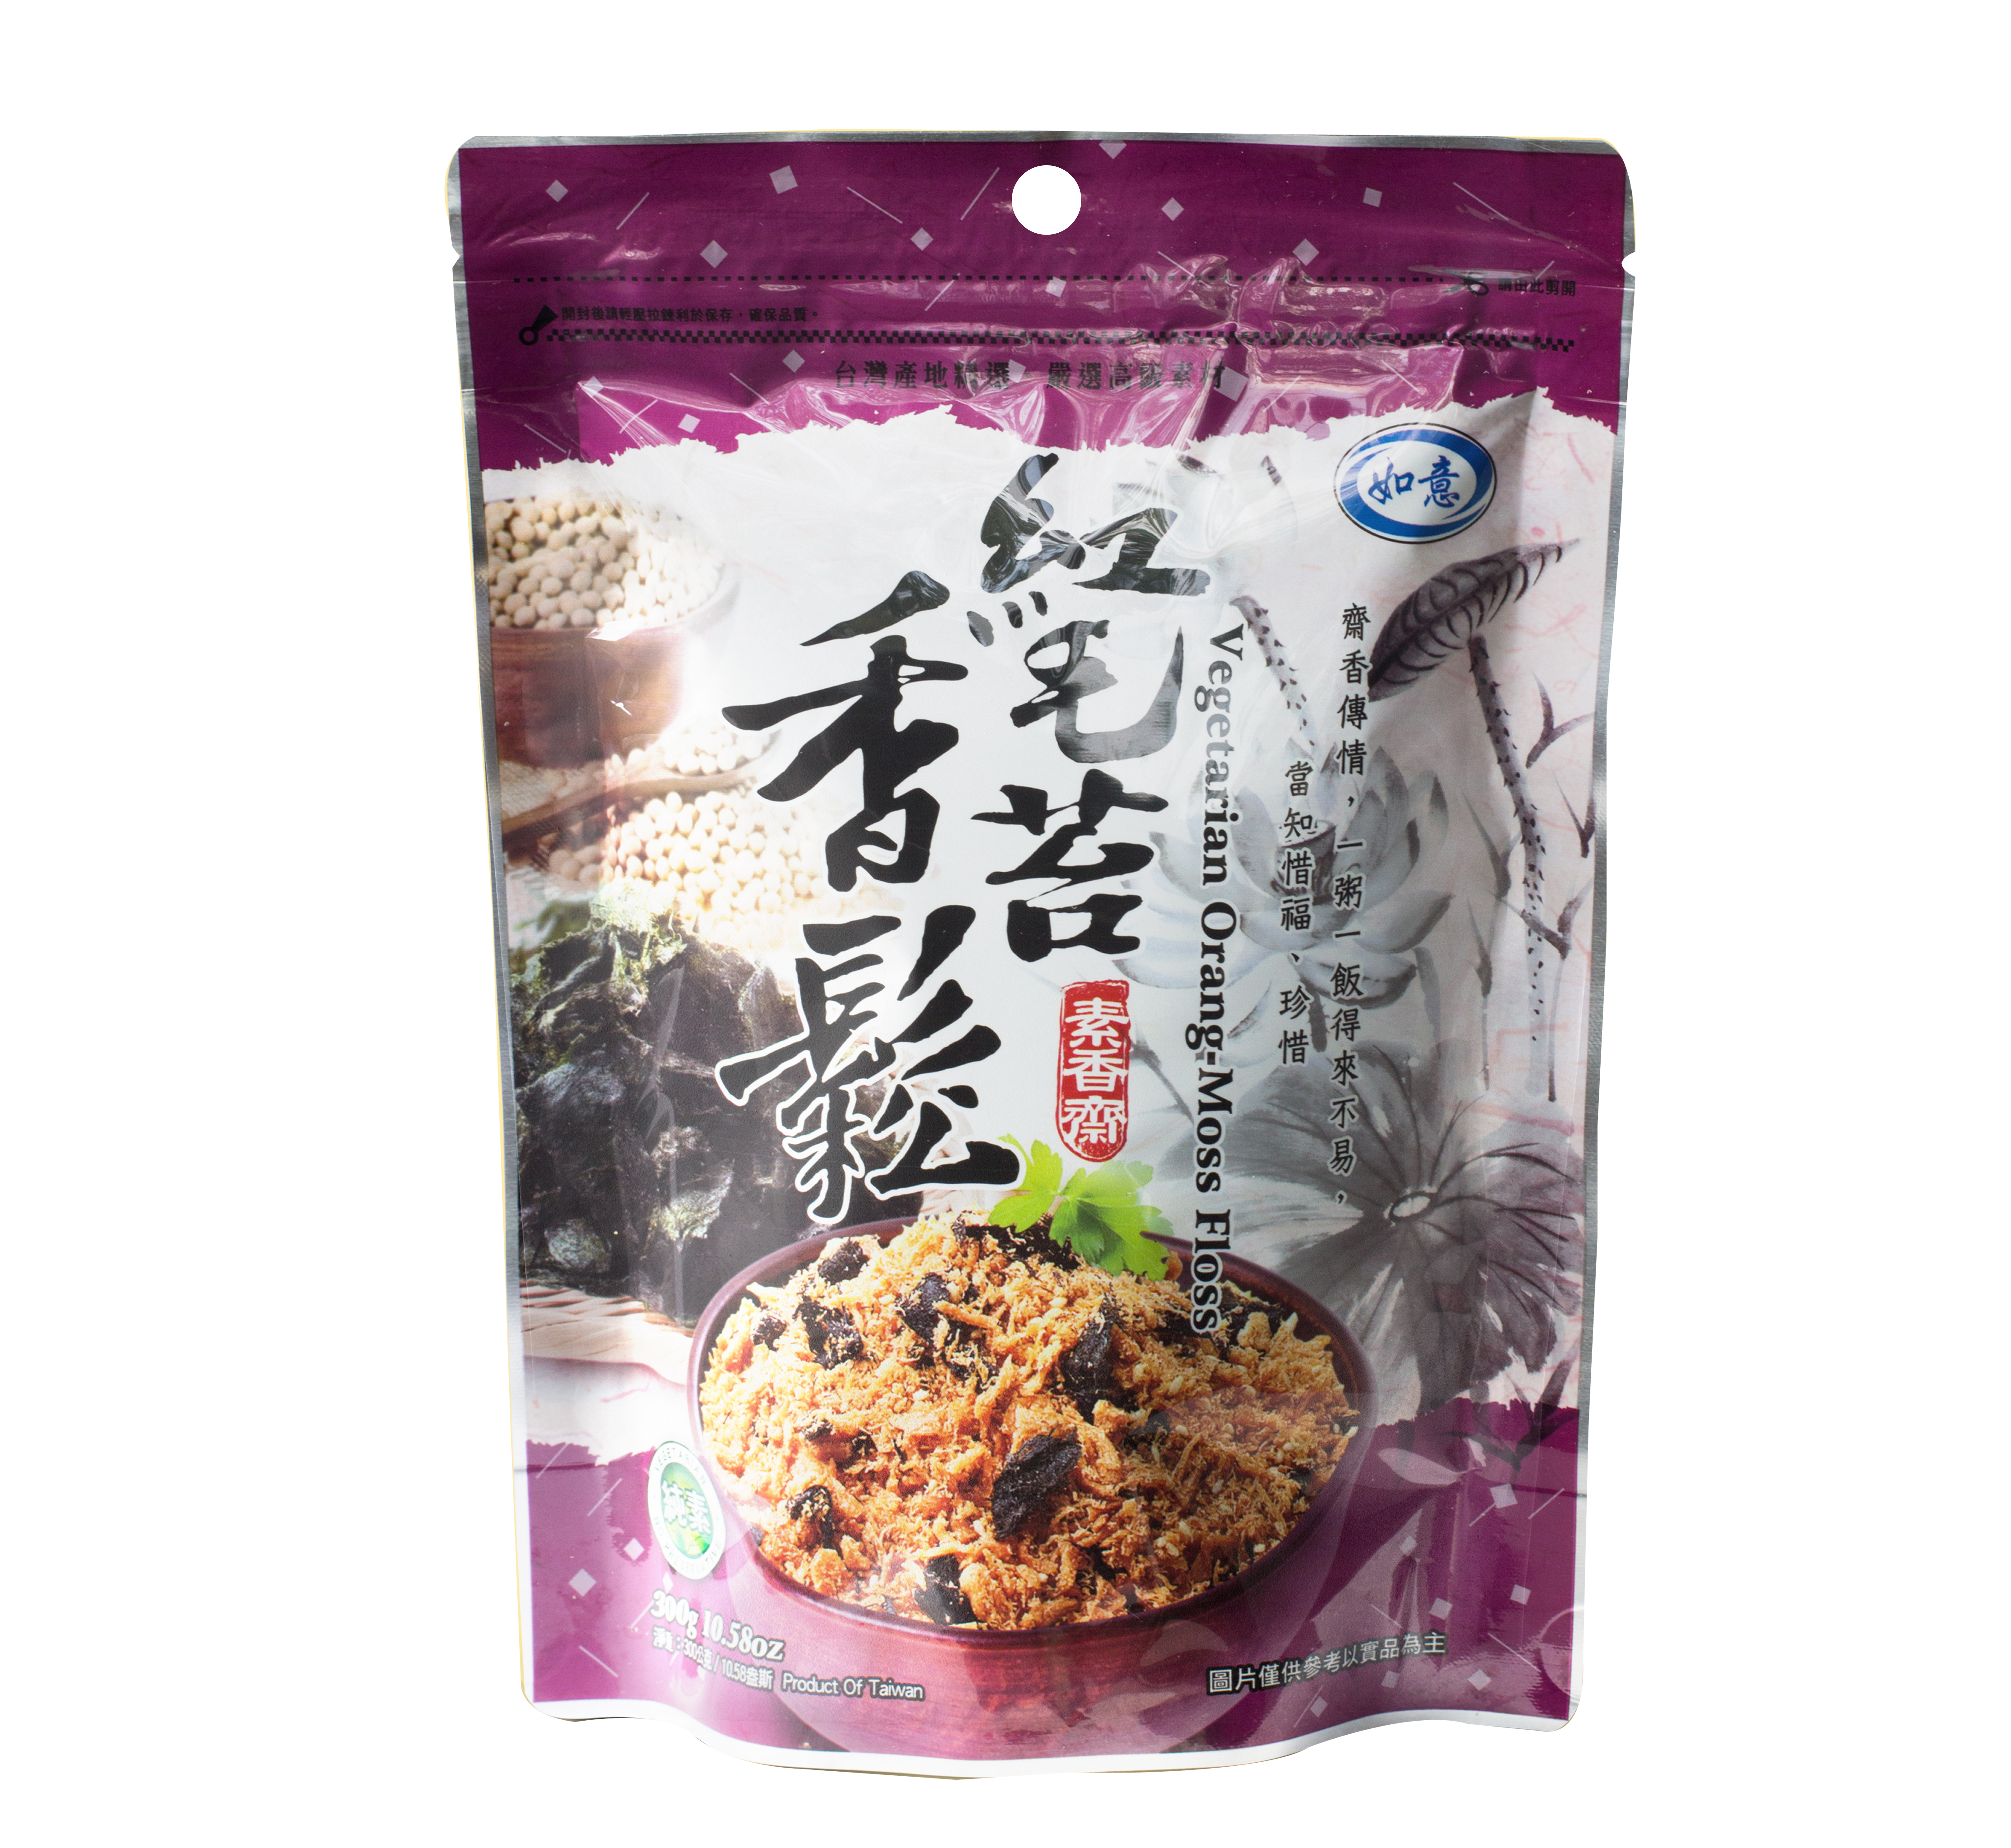 Image Orang Moss Seaweed Floss如意 - 红毛苔松 250grams